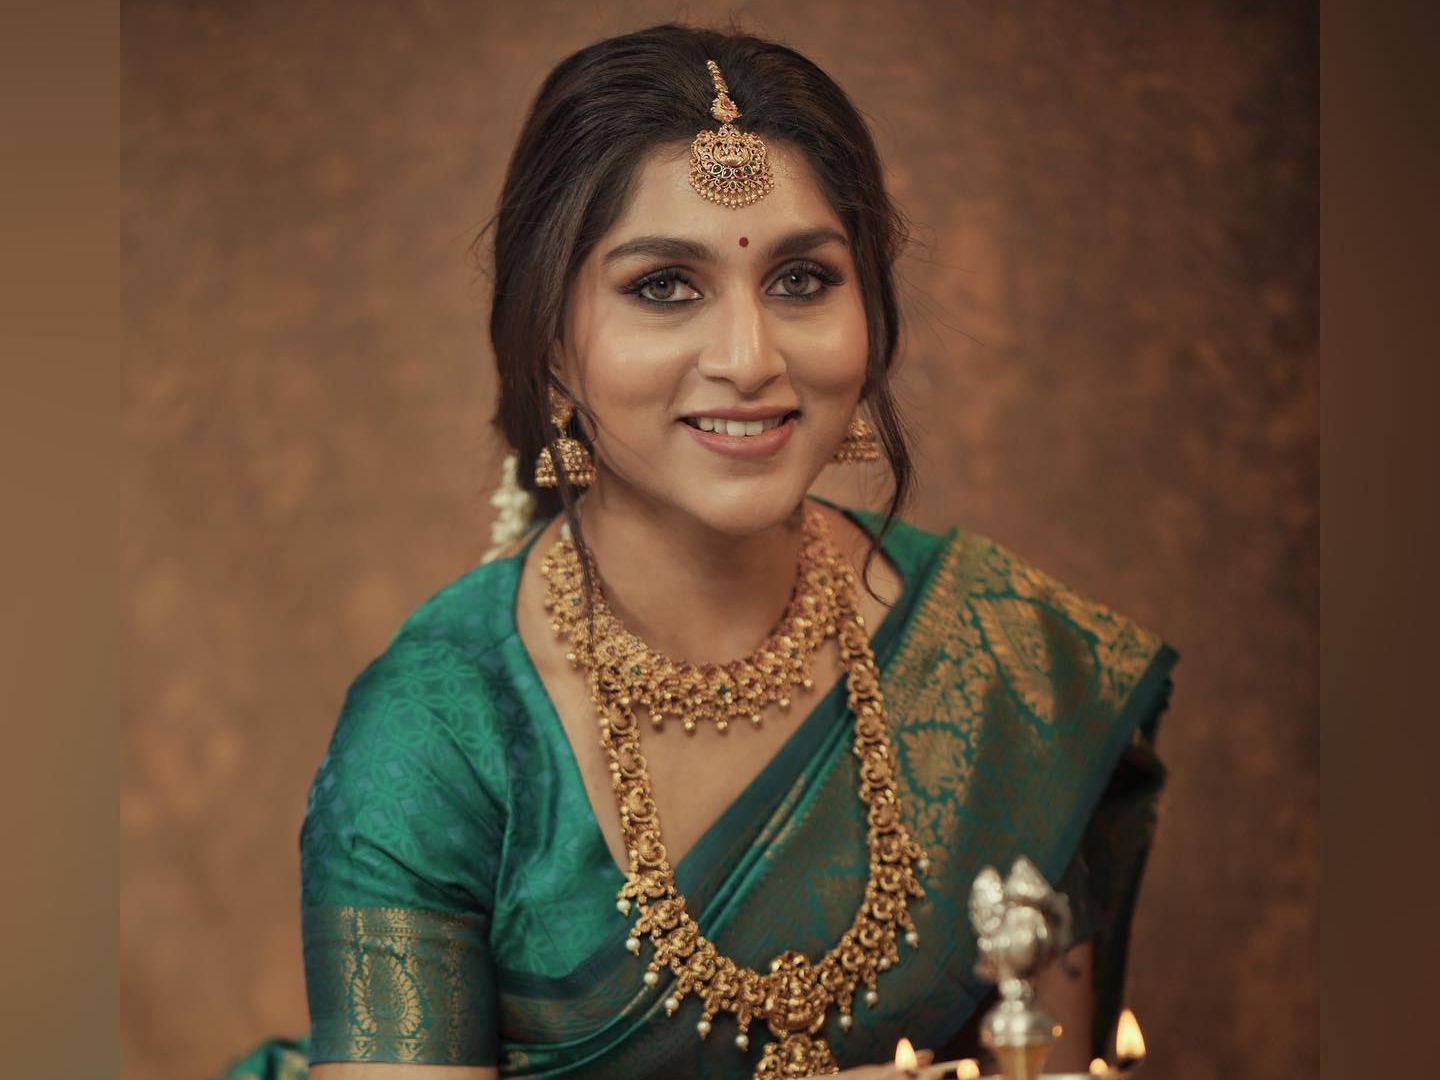 Aradhana Kannada Actress Wikipedia, Age, Family And Biography